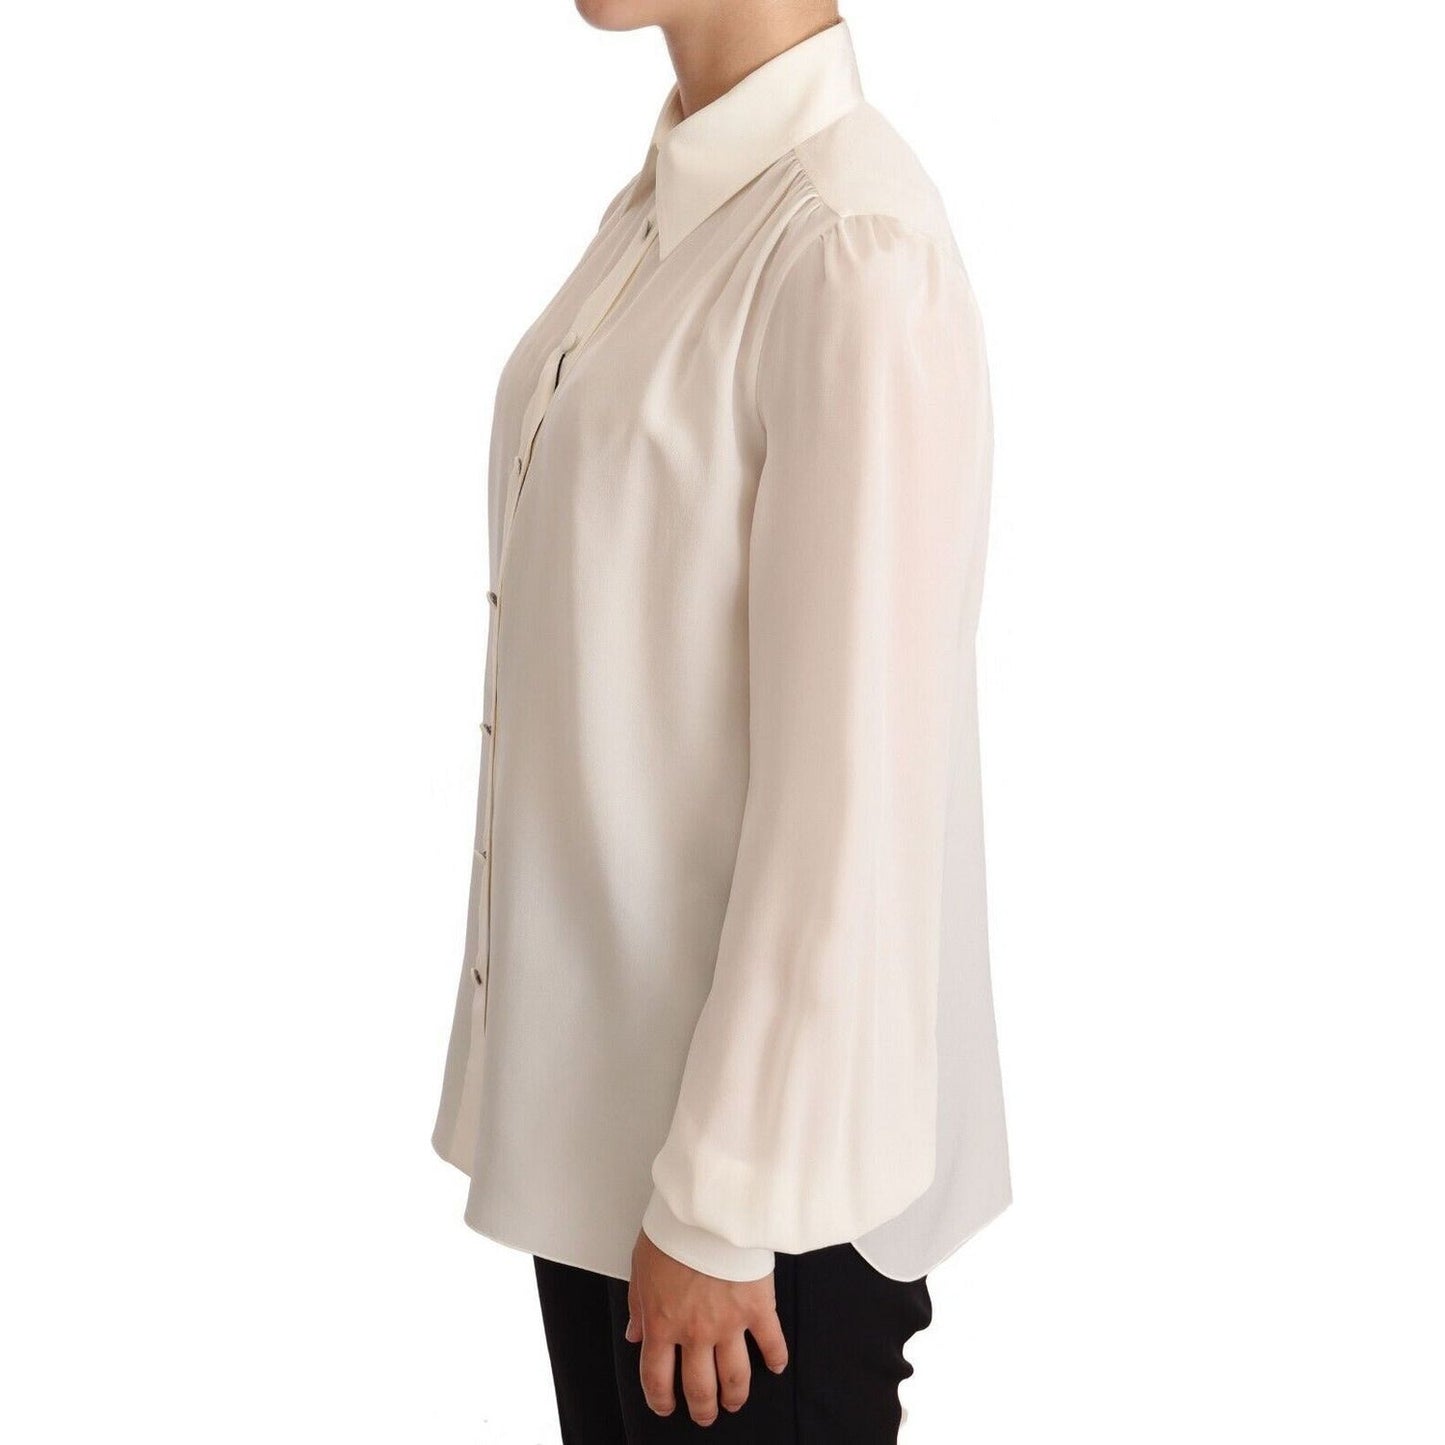 Dolce & Gabbana Elegant Silk Top in Off White white-long-sleeve-polo-shirt-top-blouse s-l1600-1-62-8eae666f-46d.jpg